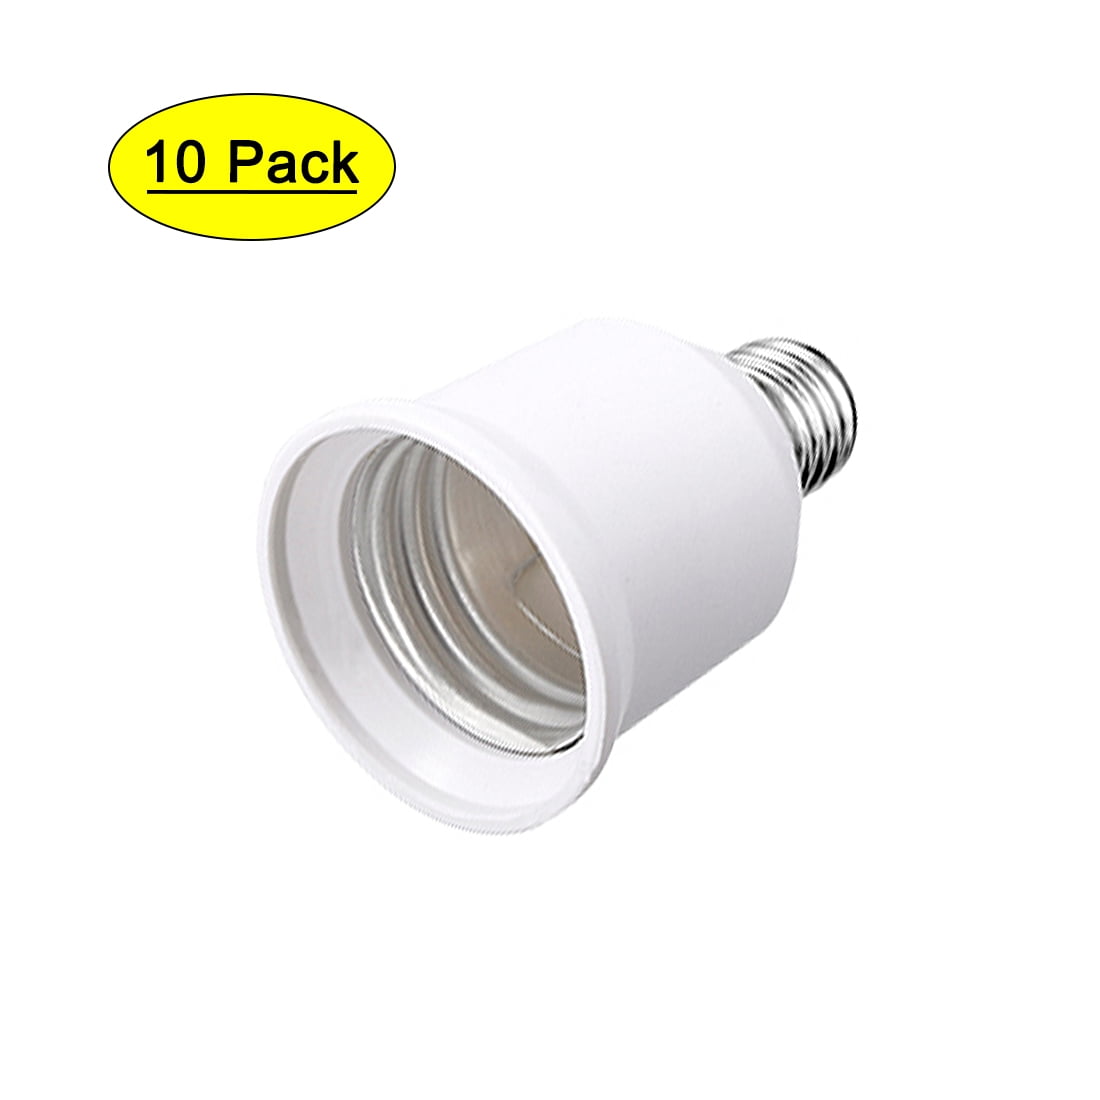 US/EU/E27/E17/E14/B22/G24 Base Socket Adapter Converter For LED Light Lamp Bulb